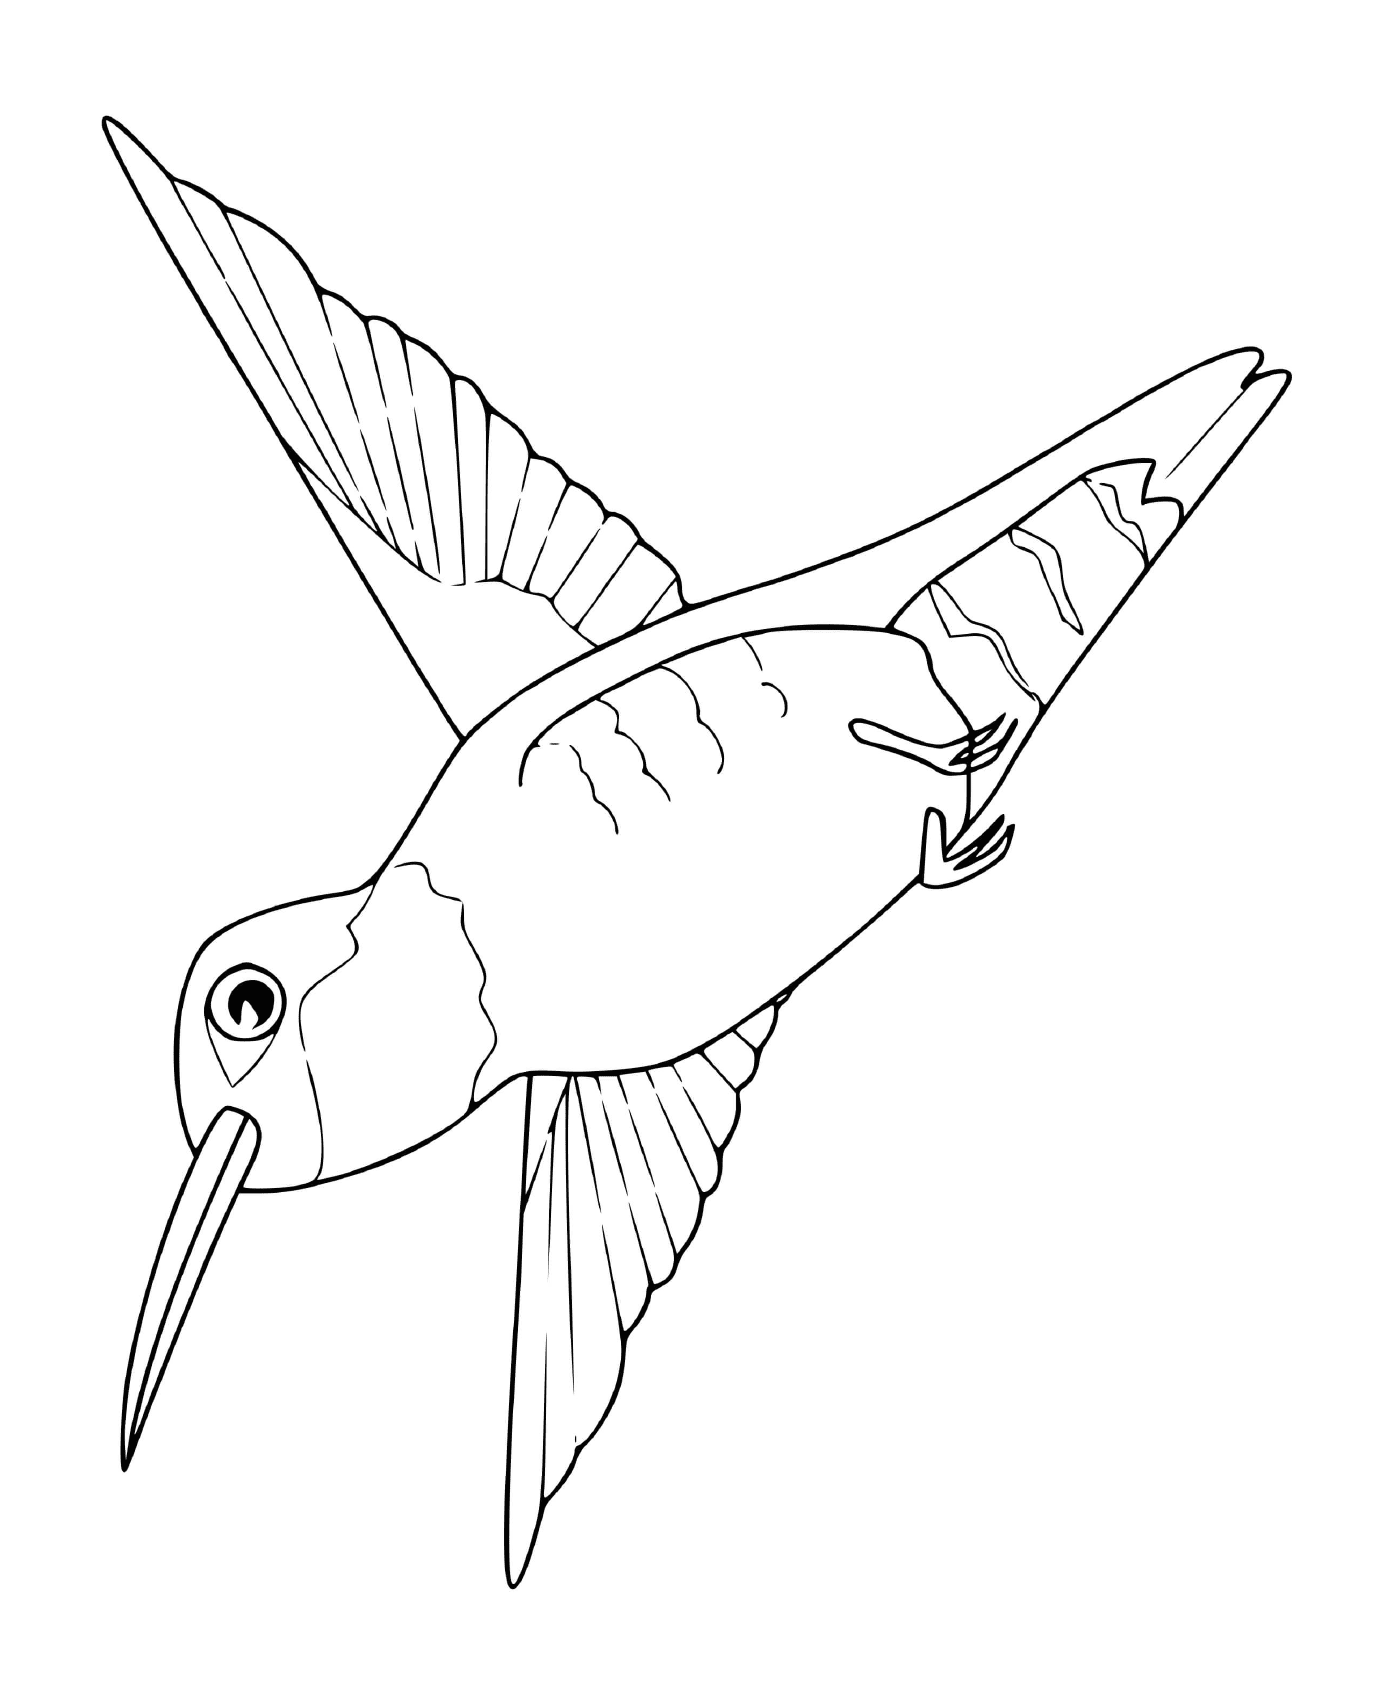  Hummingbird 